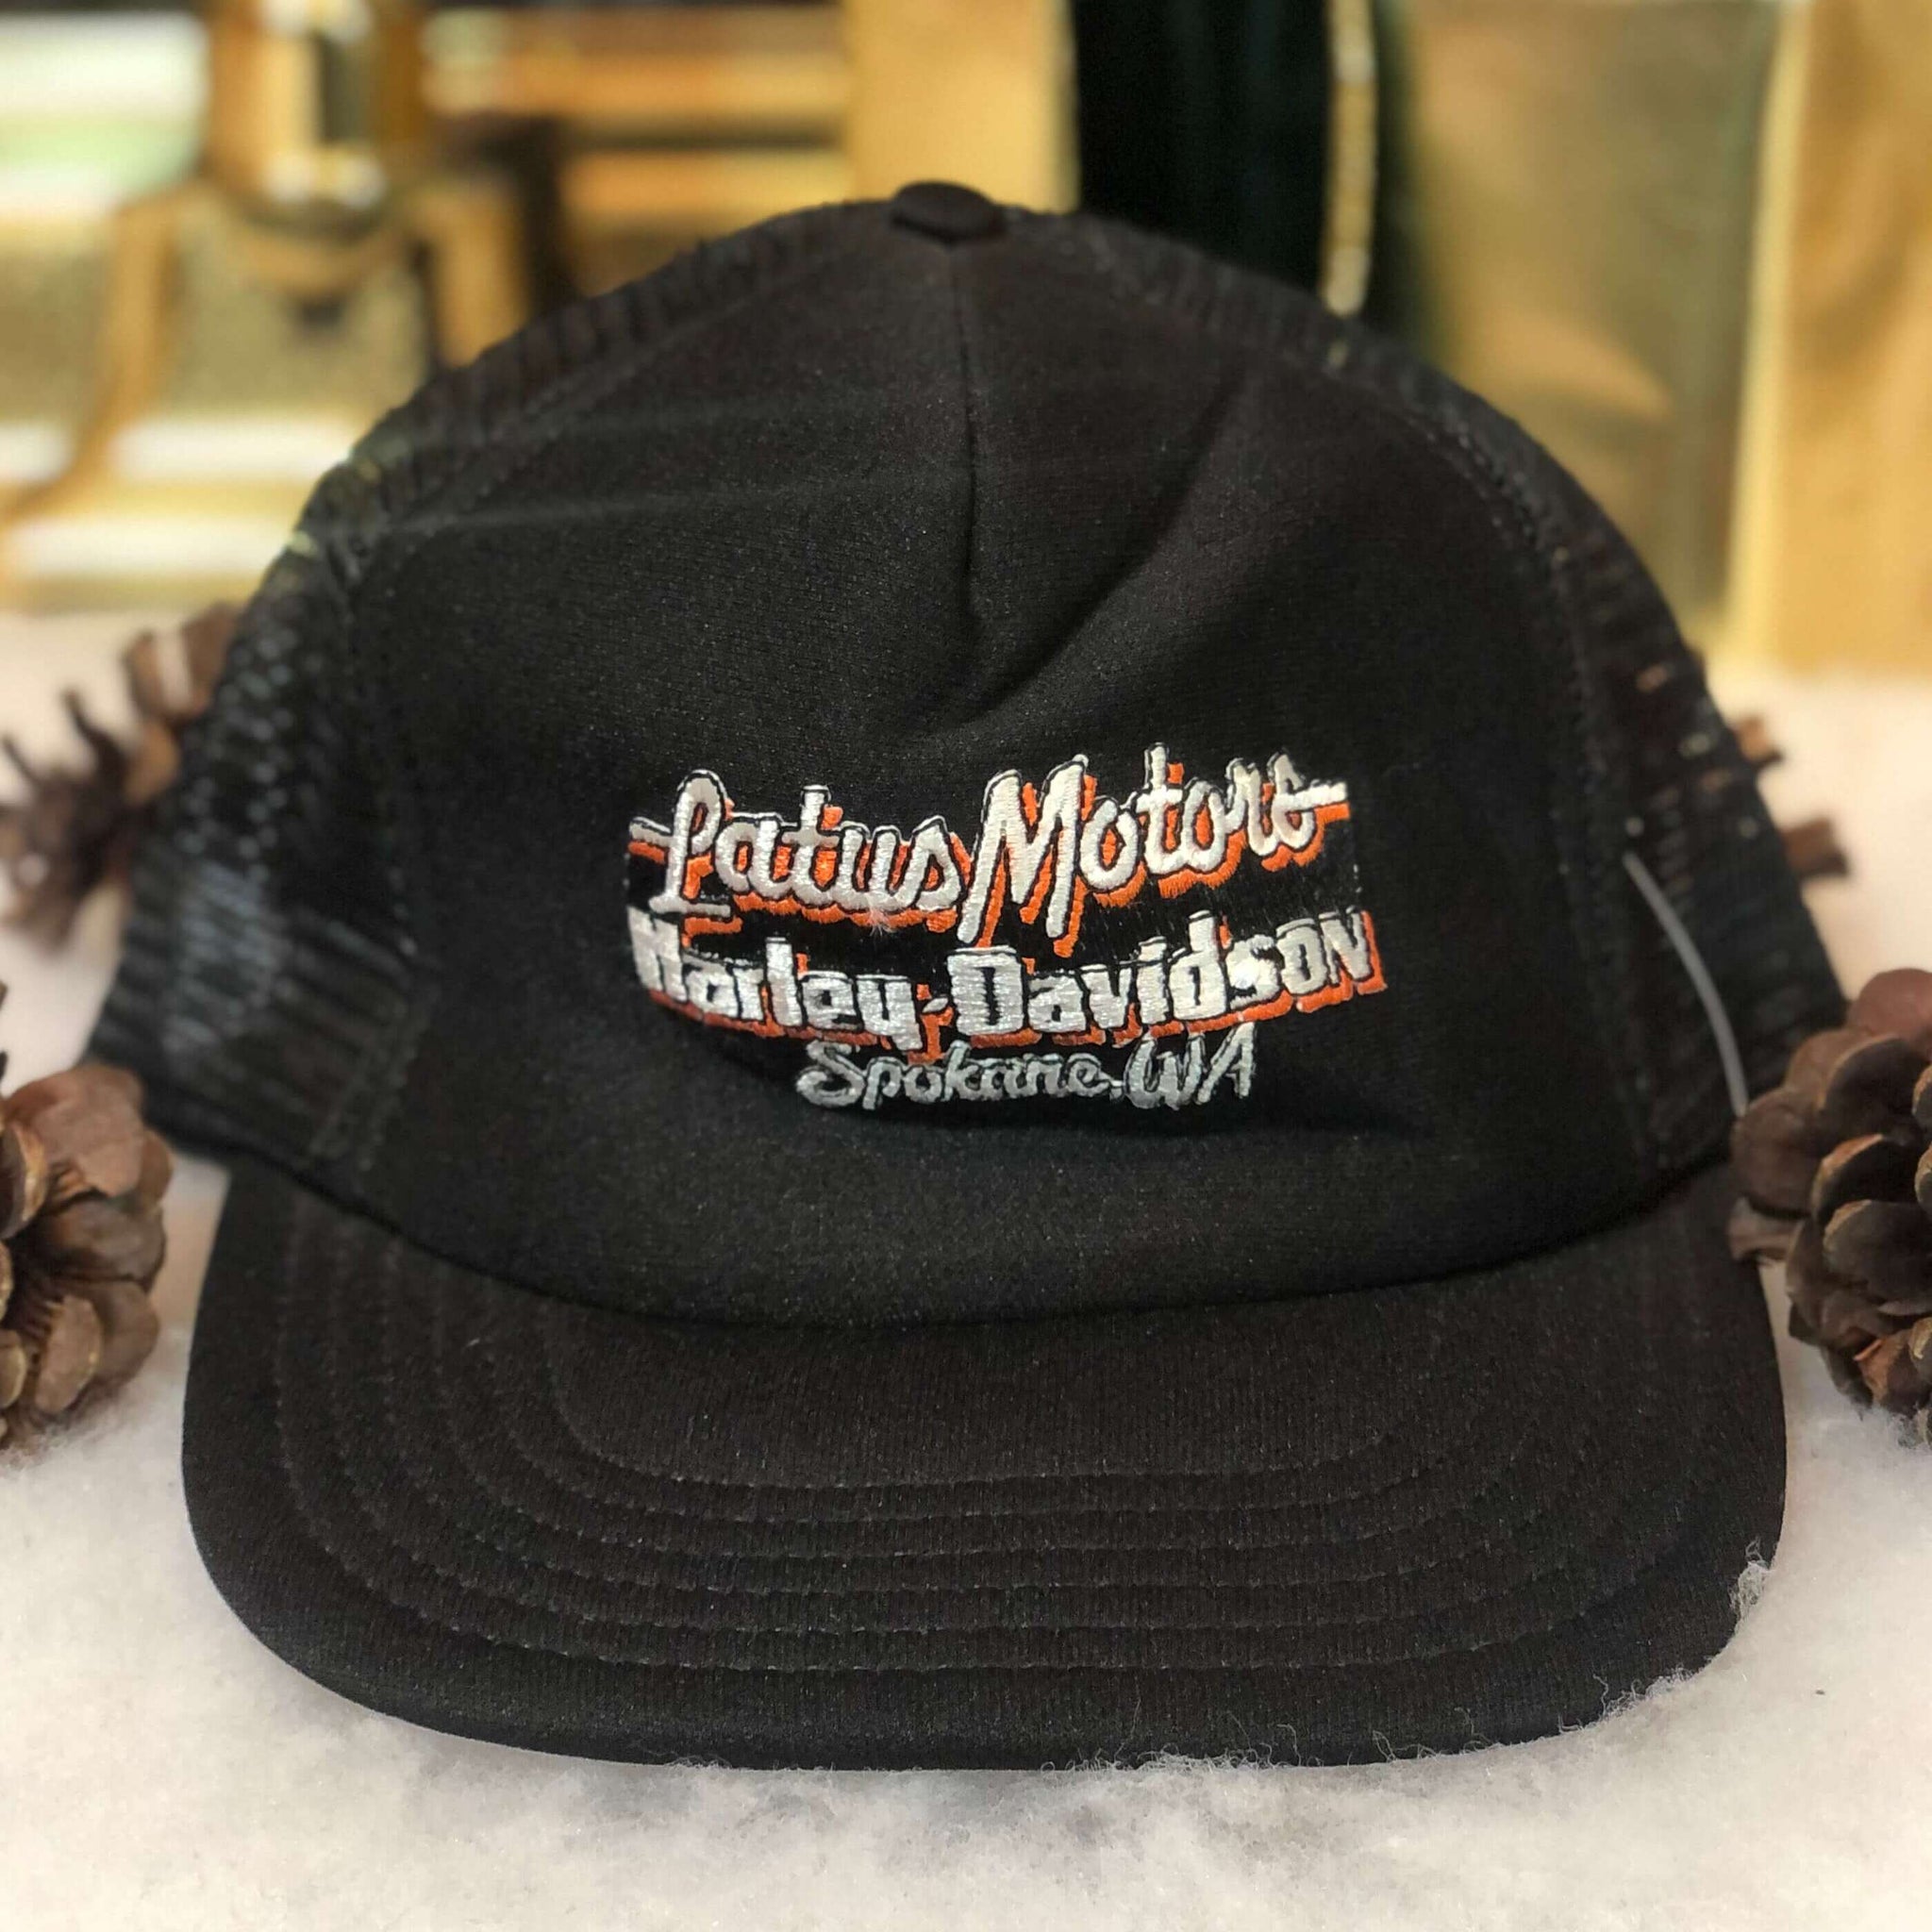 Vintage Deadstock NWOT Latus Motors Harley-Davidson Spokane Washington Trucker Hat